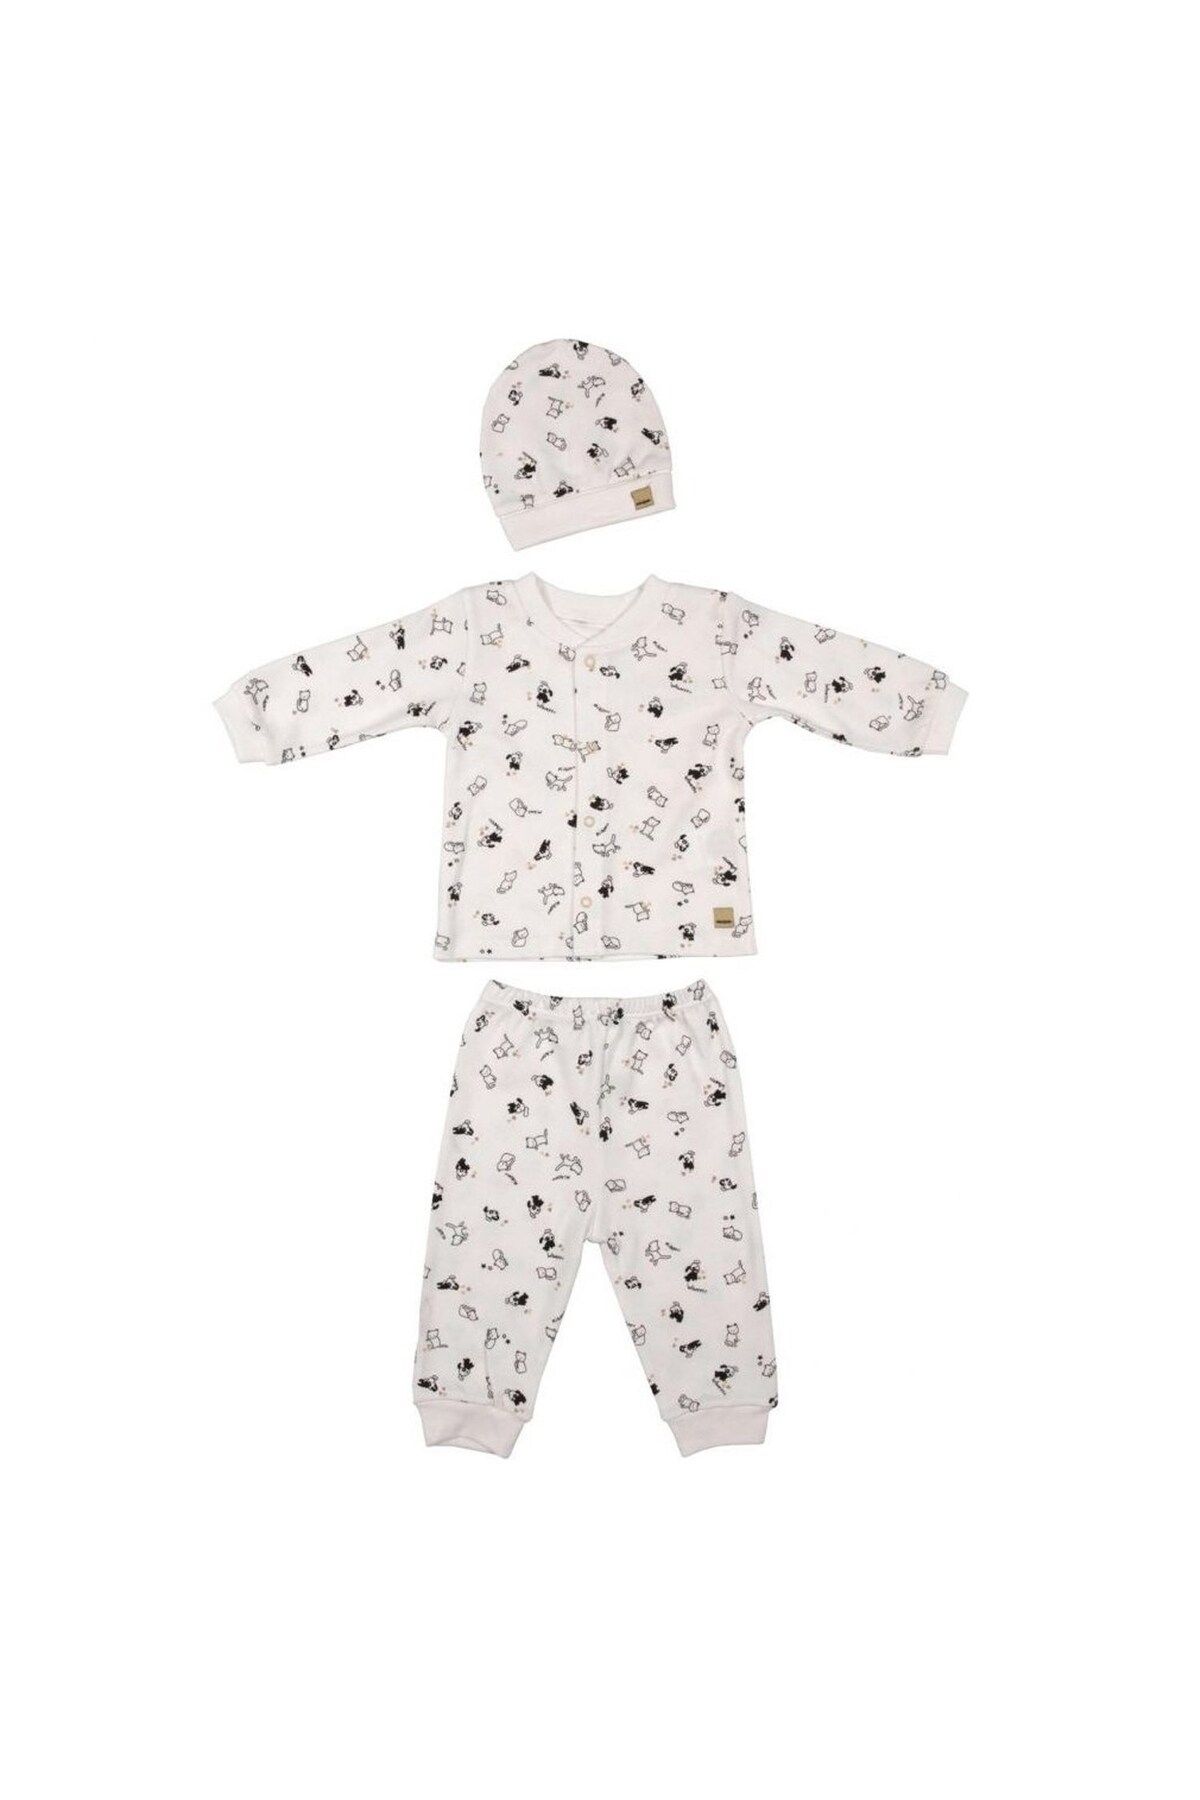 Bebepan Pets Bebek Pijama Takımı 2059 Orjinal